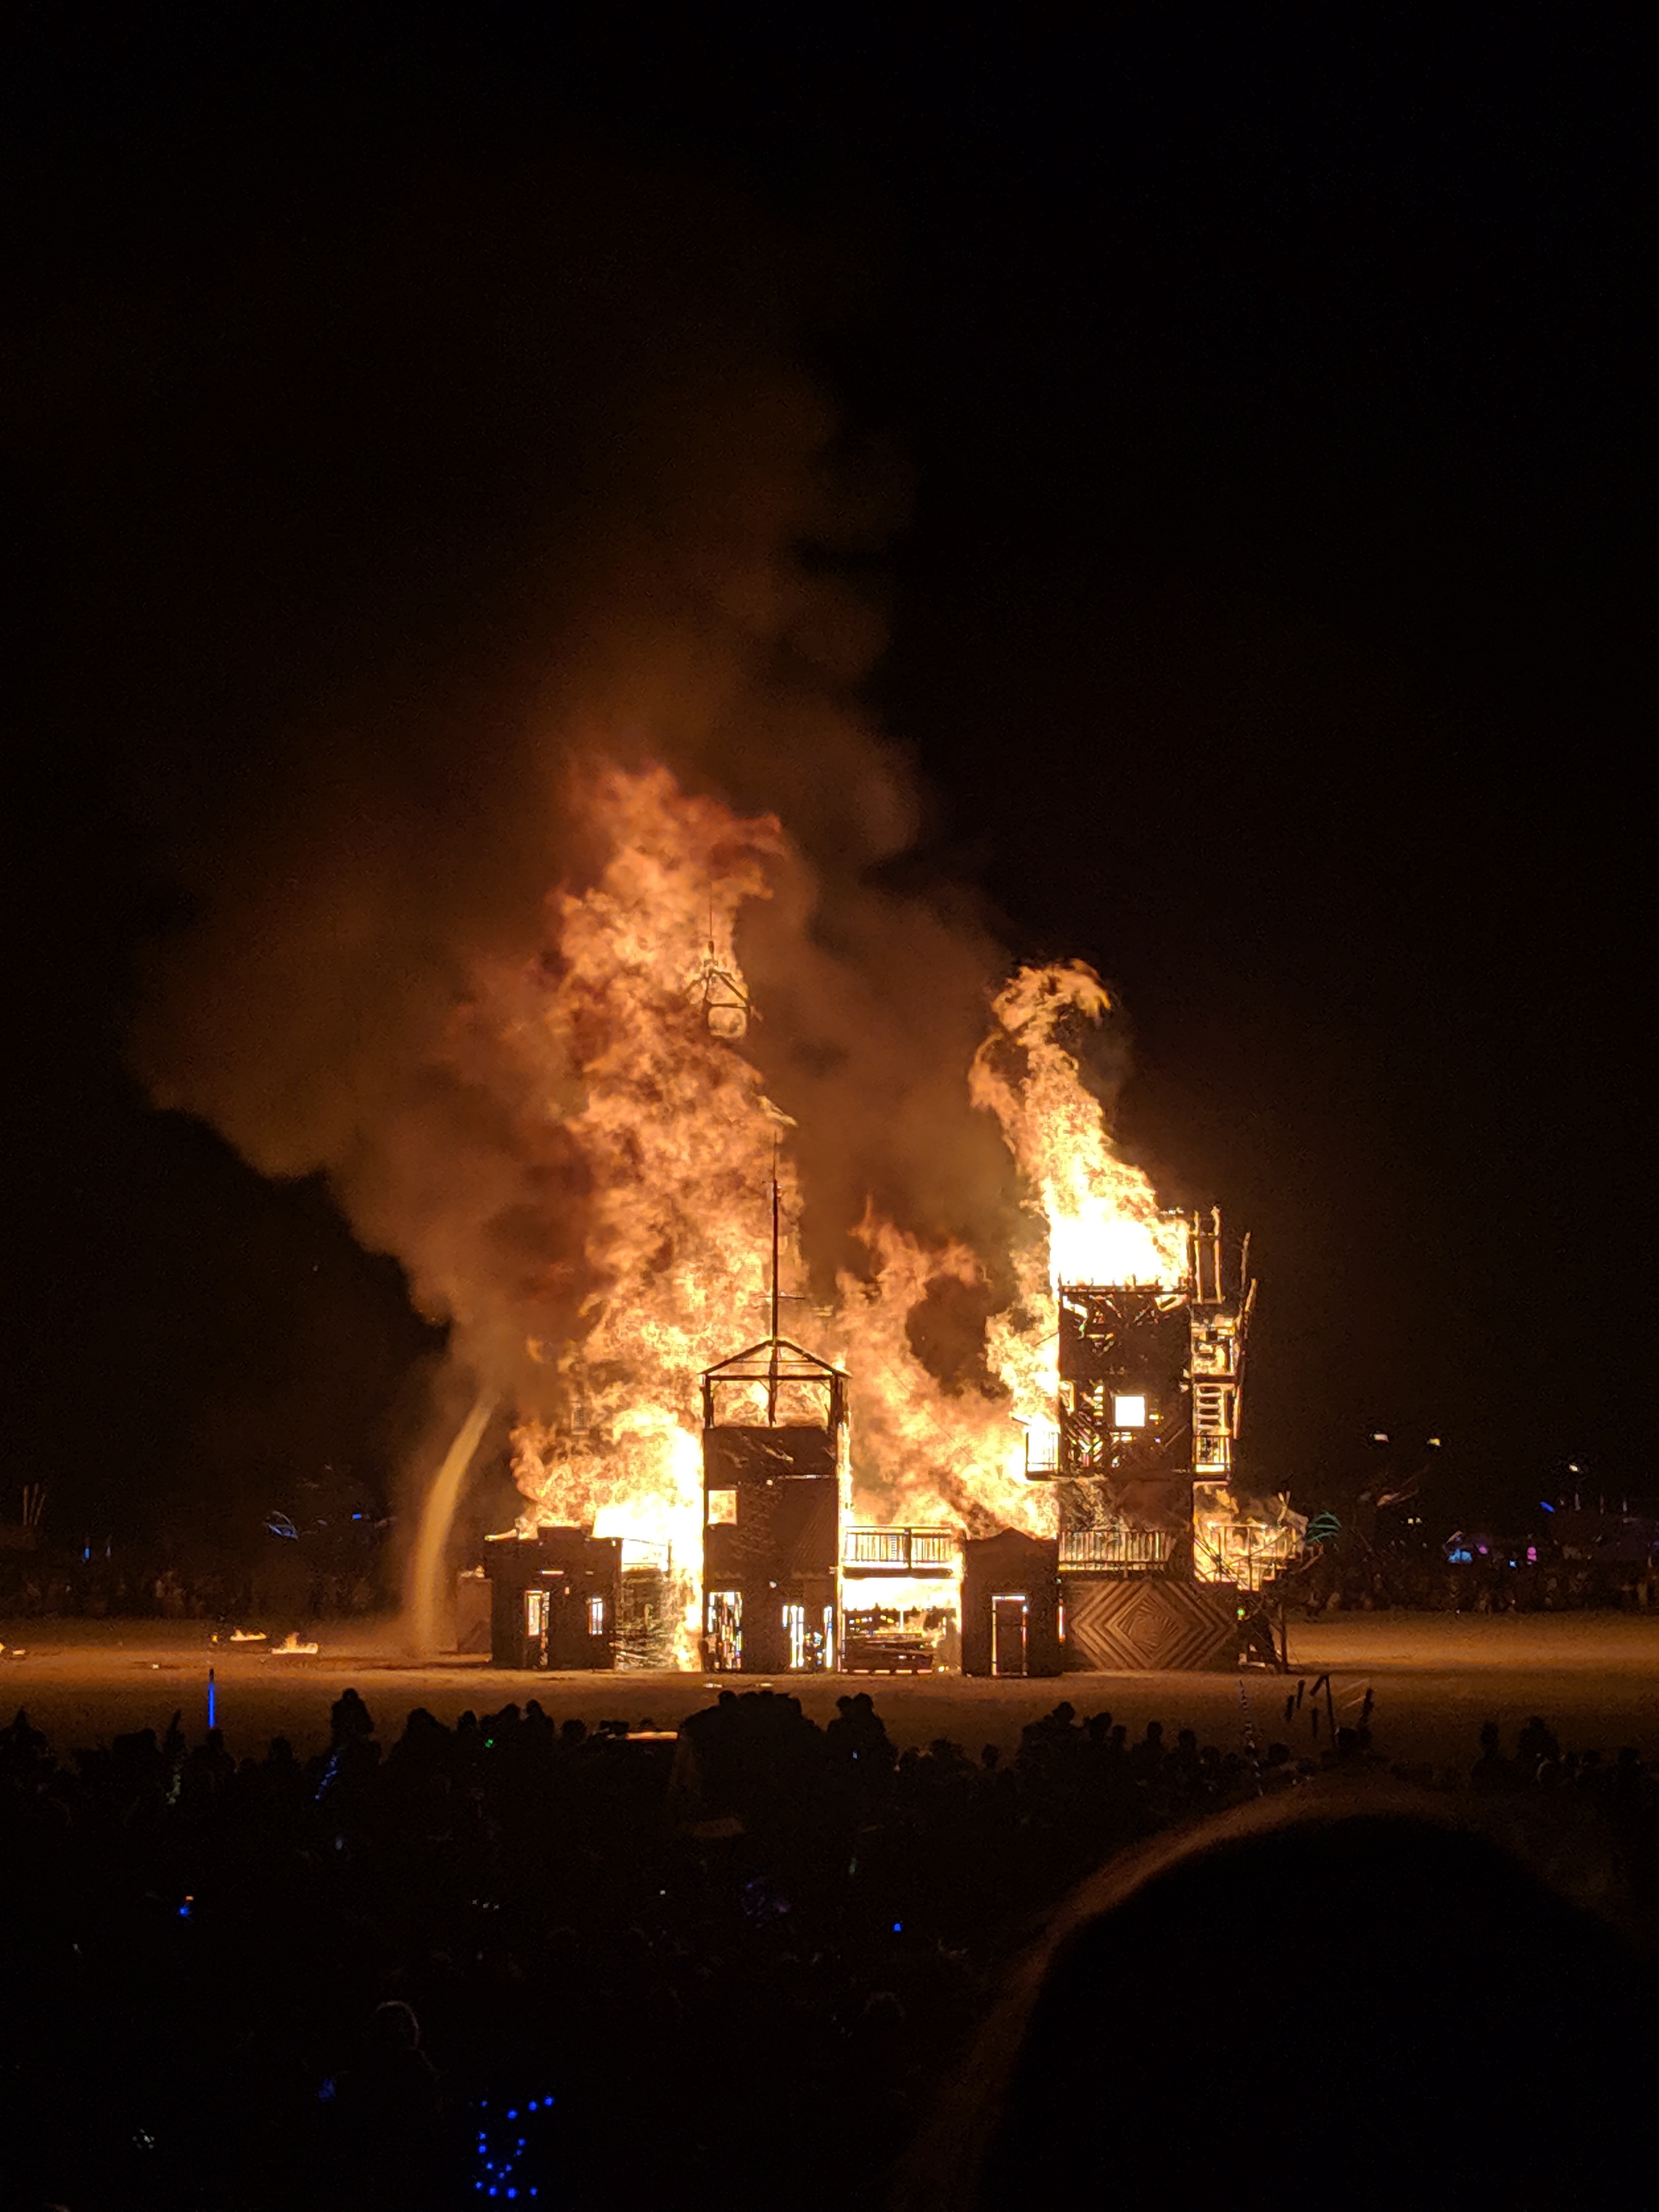 Burning Man art installation on fire, August 2019